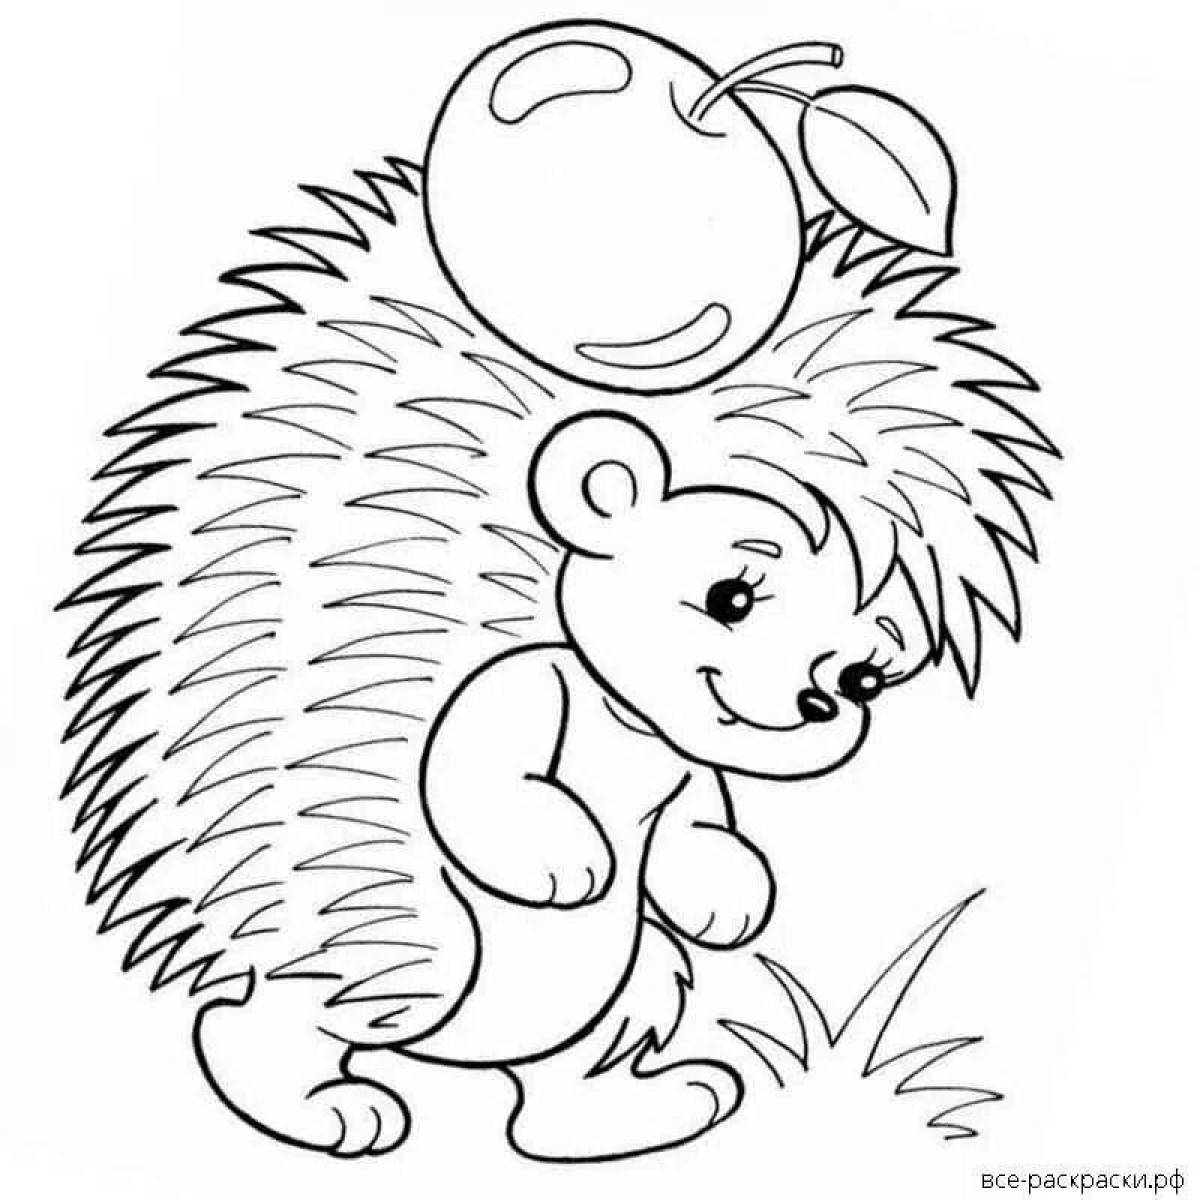 Funny hedgehog drawing